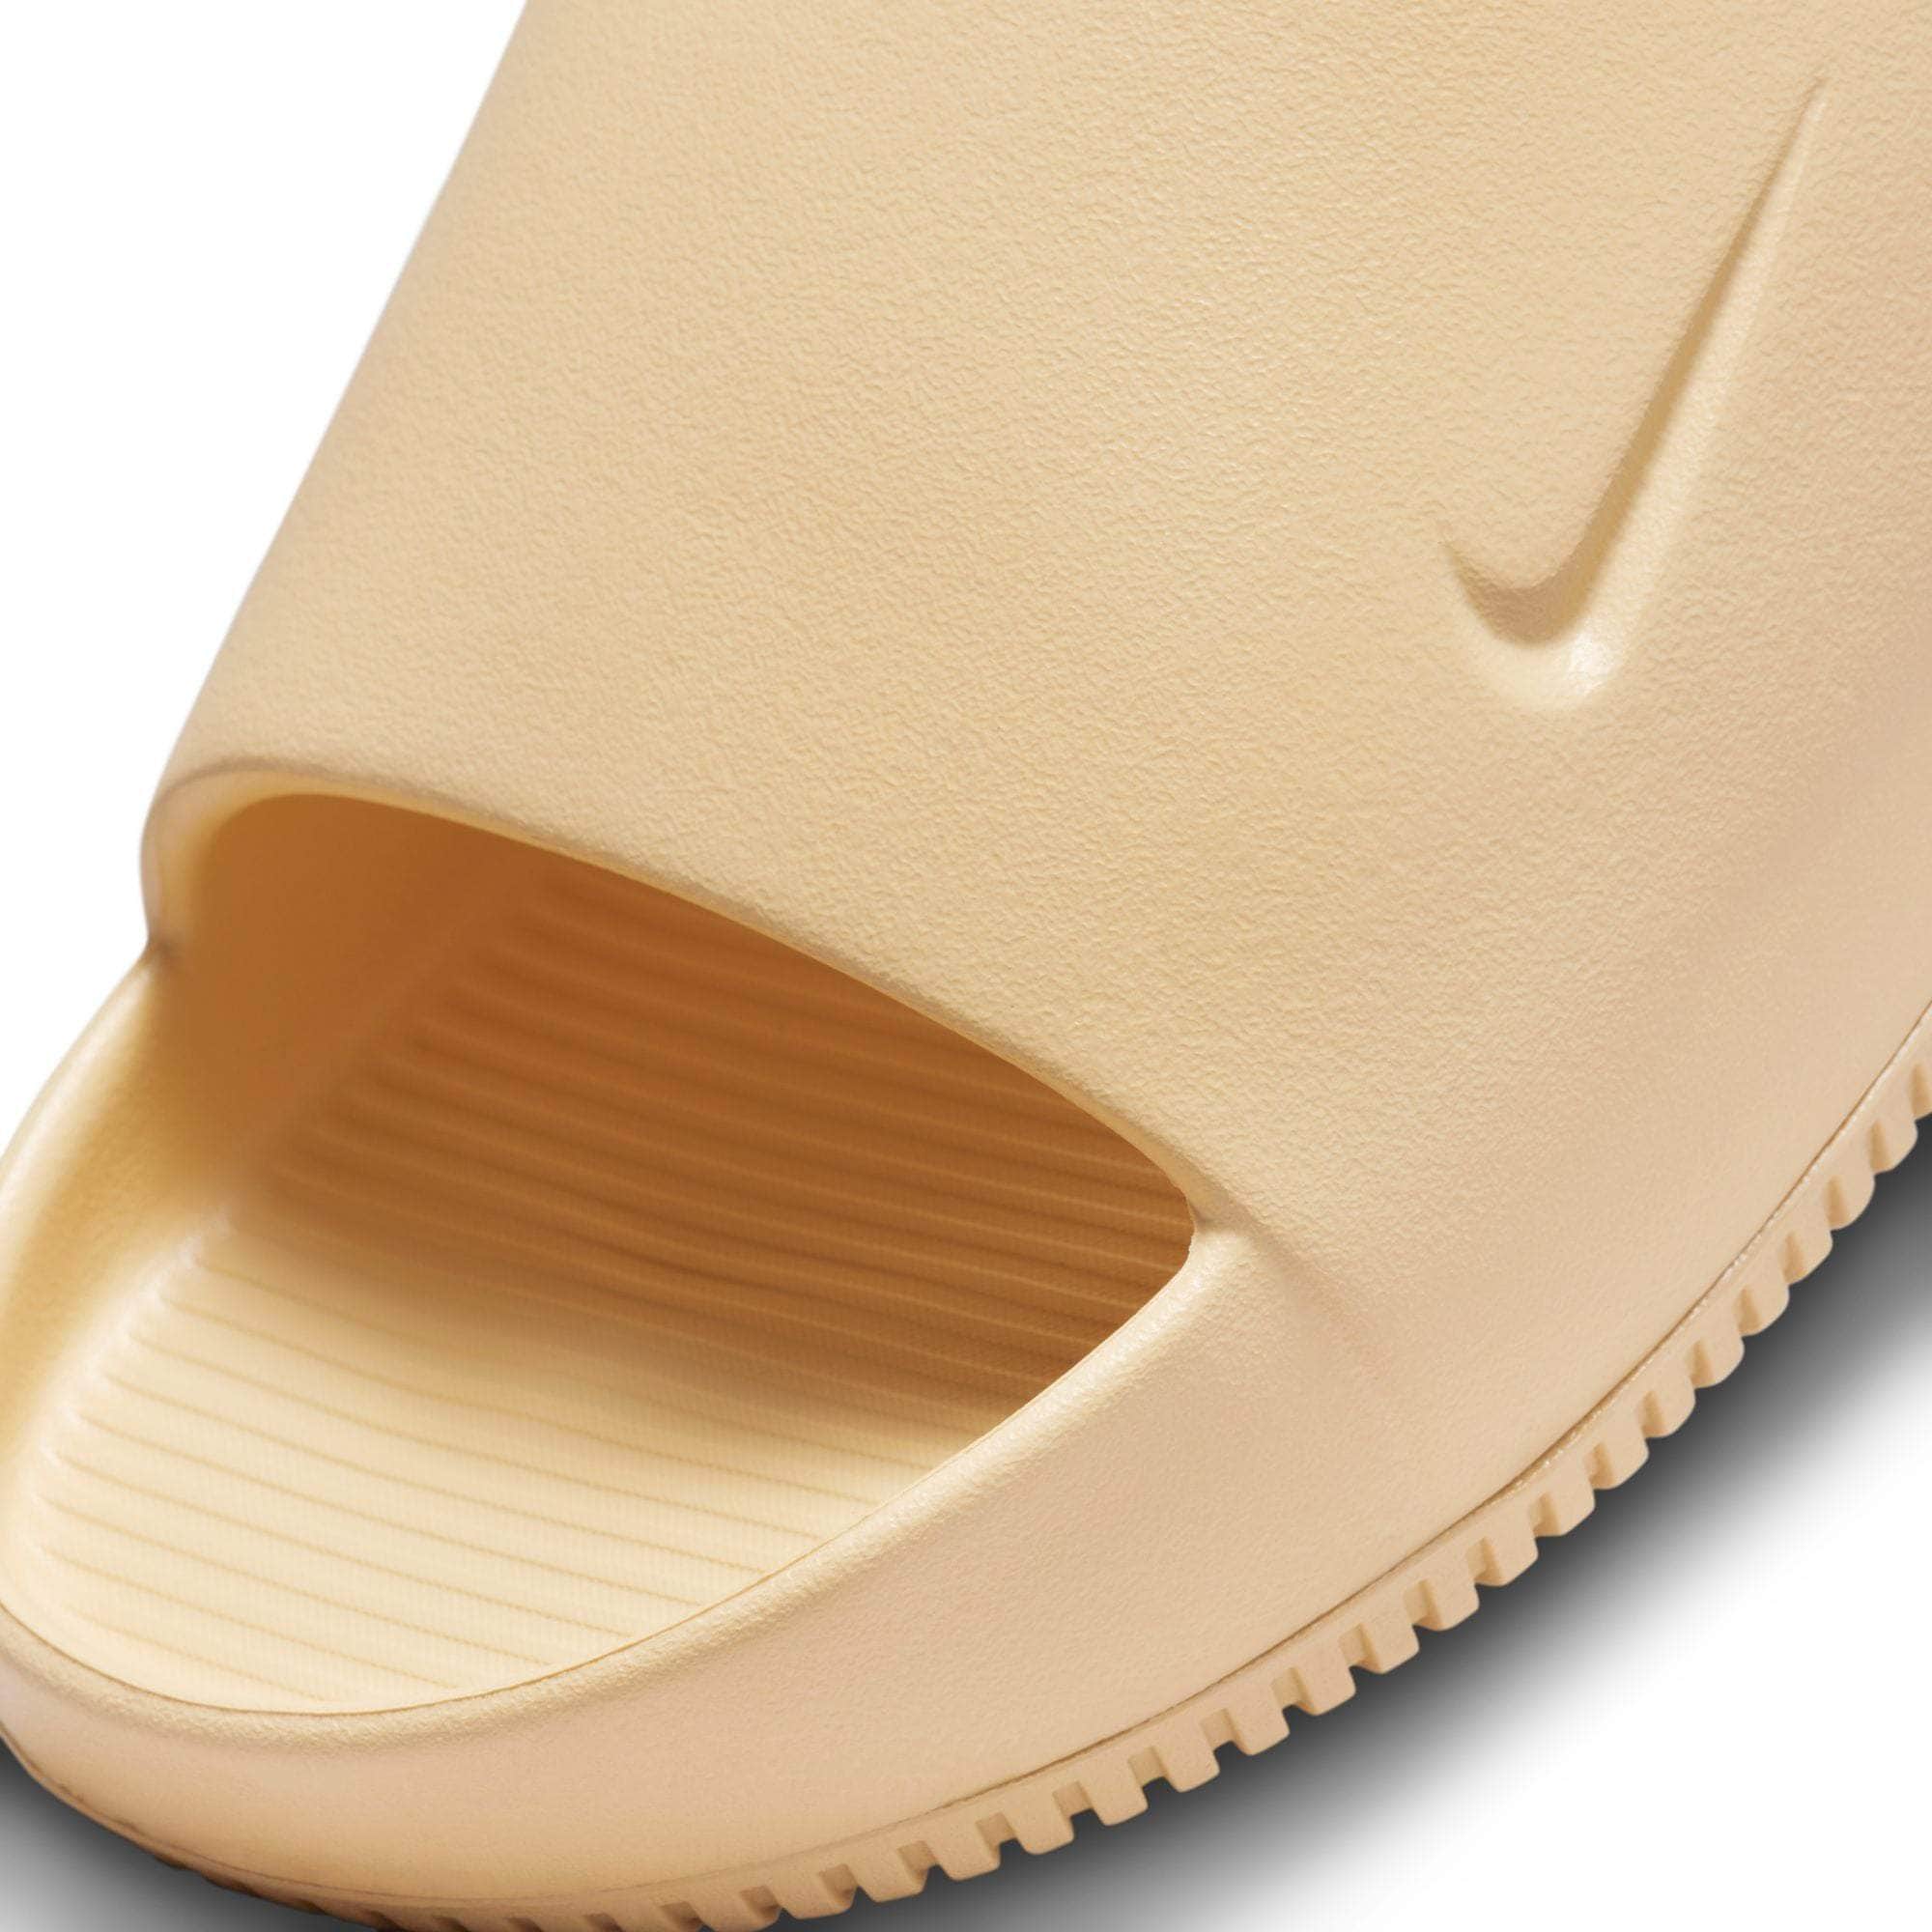 NIKE FOOTWEAR Nike Calm Slide "Sesame" - Men's